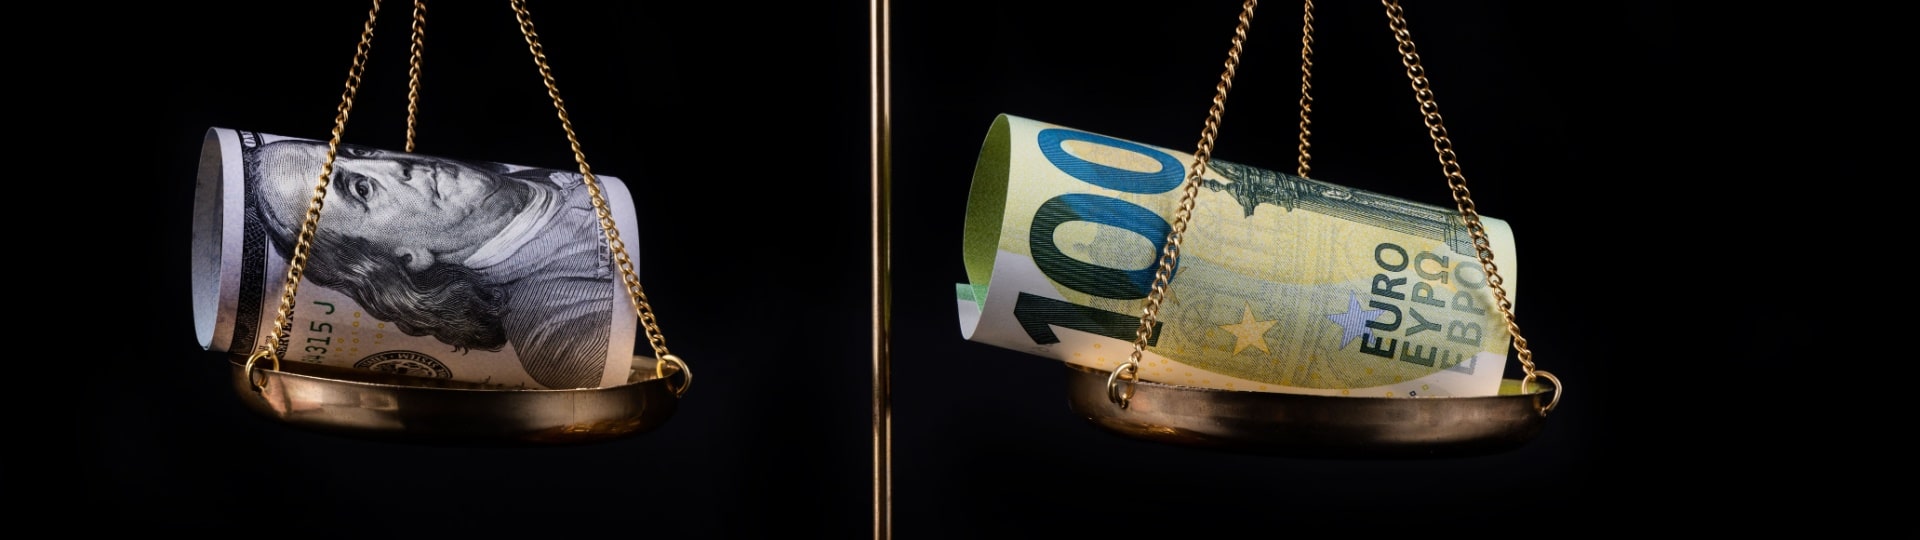 Proč euro zlevňuje a americký dolar zdražuje?